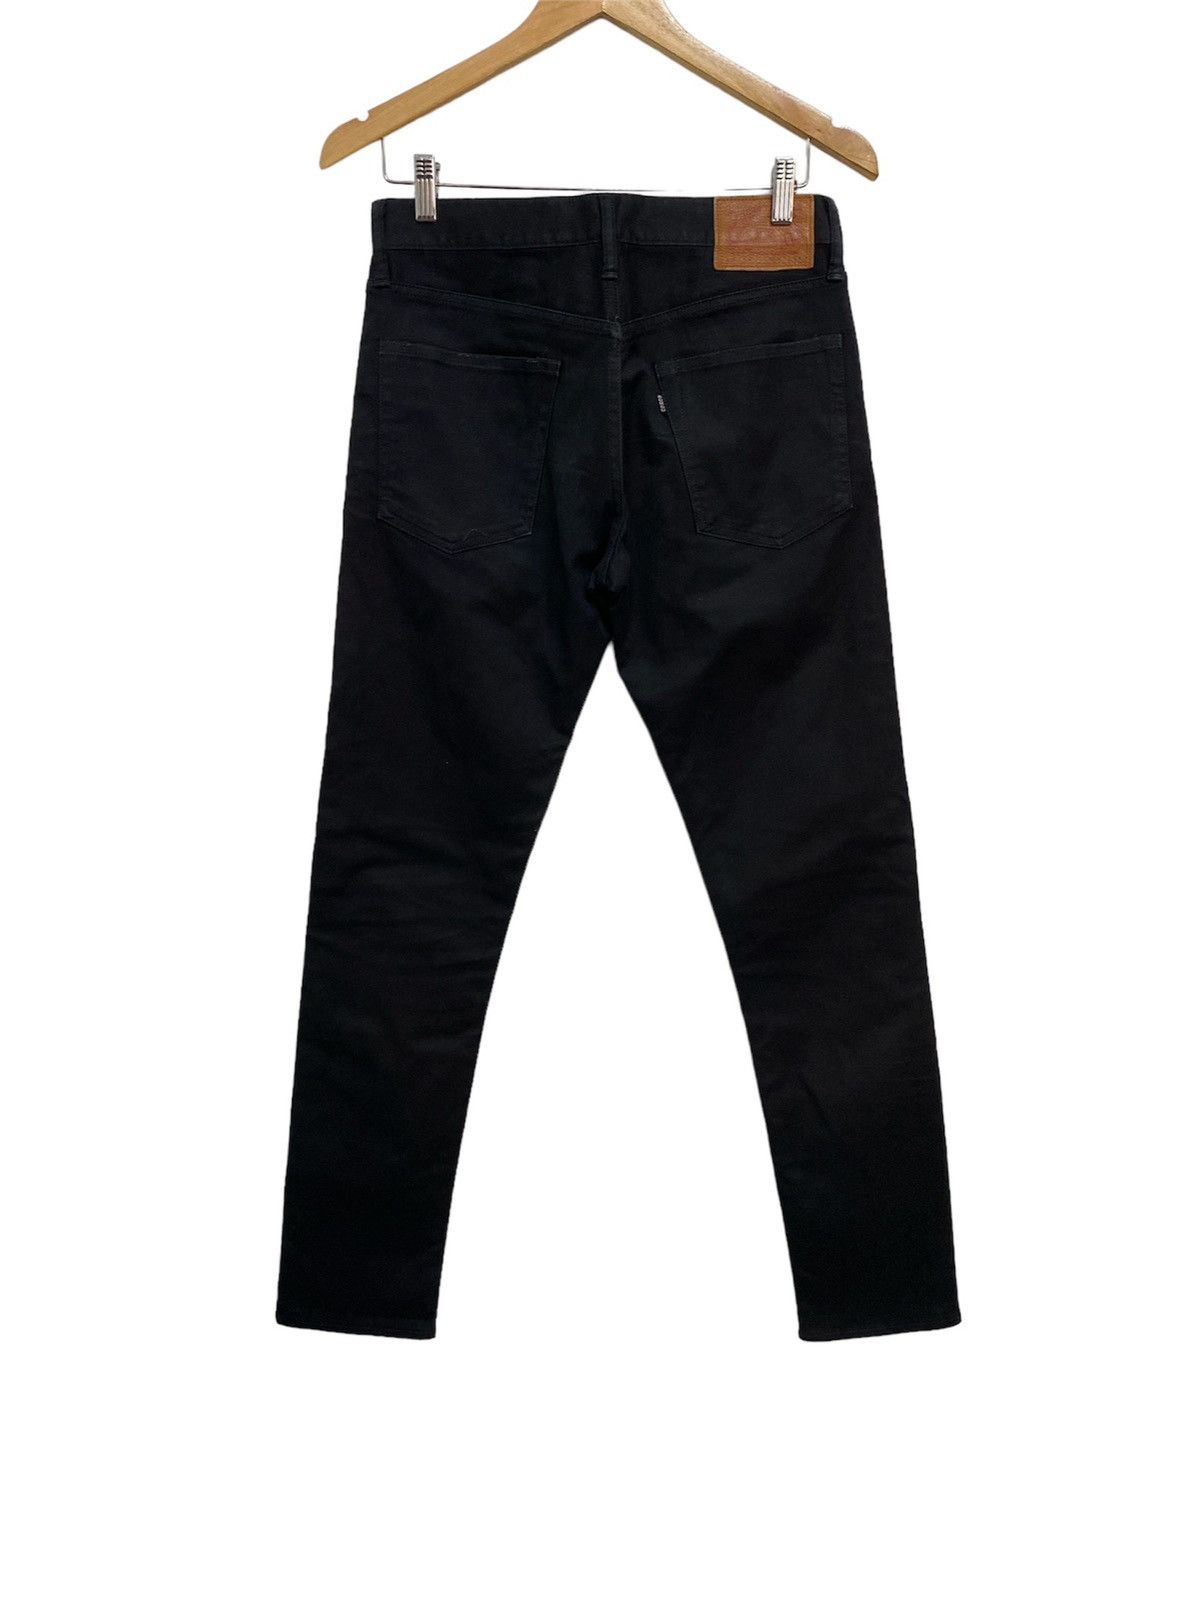 Burgus Plus Hinoya Original Black Skinny Jeans - 6